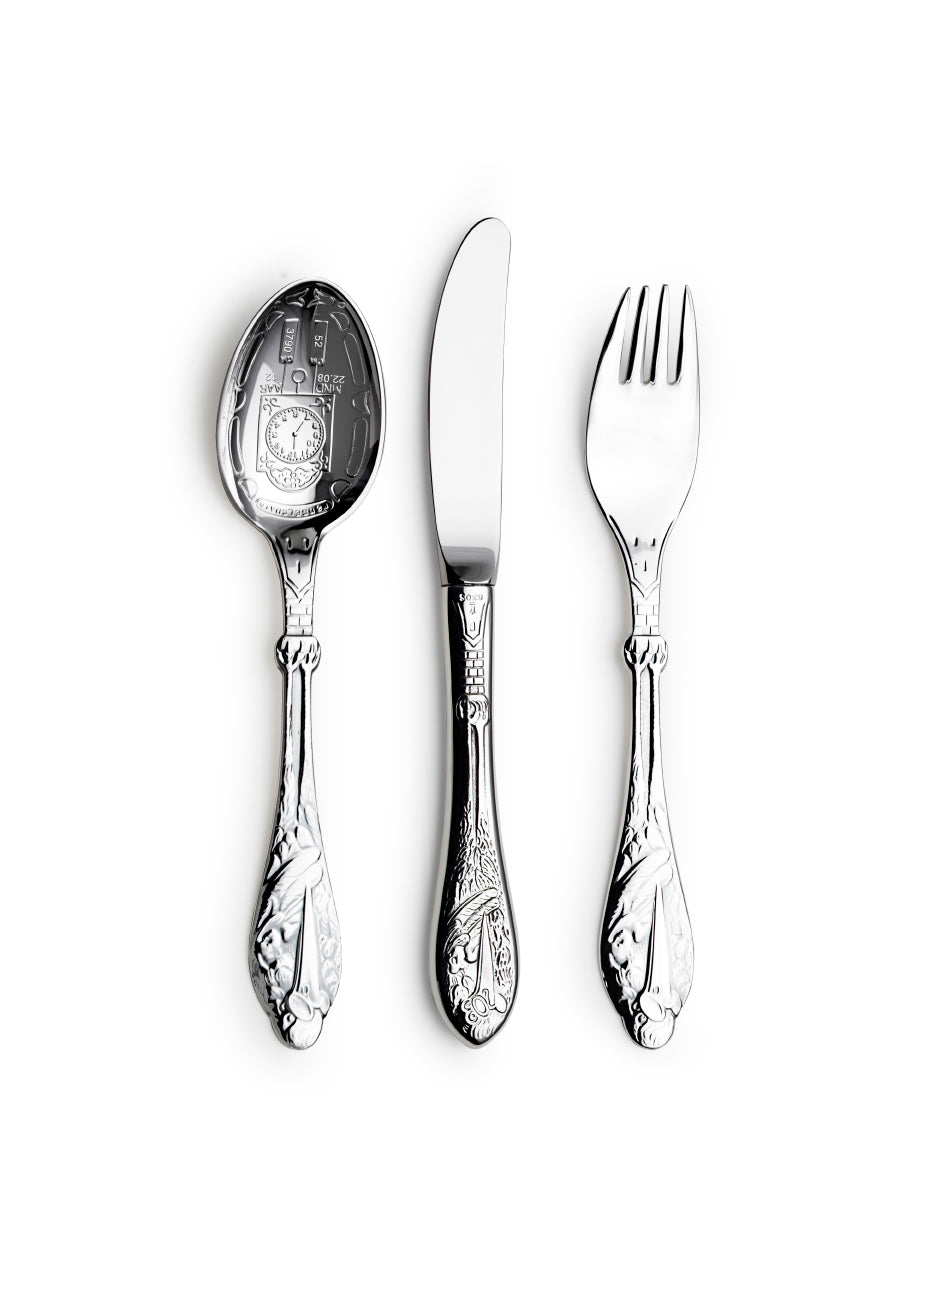 Stork spoon, knife and fork set